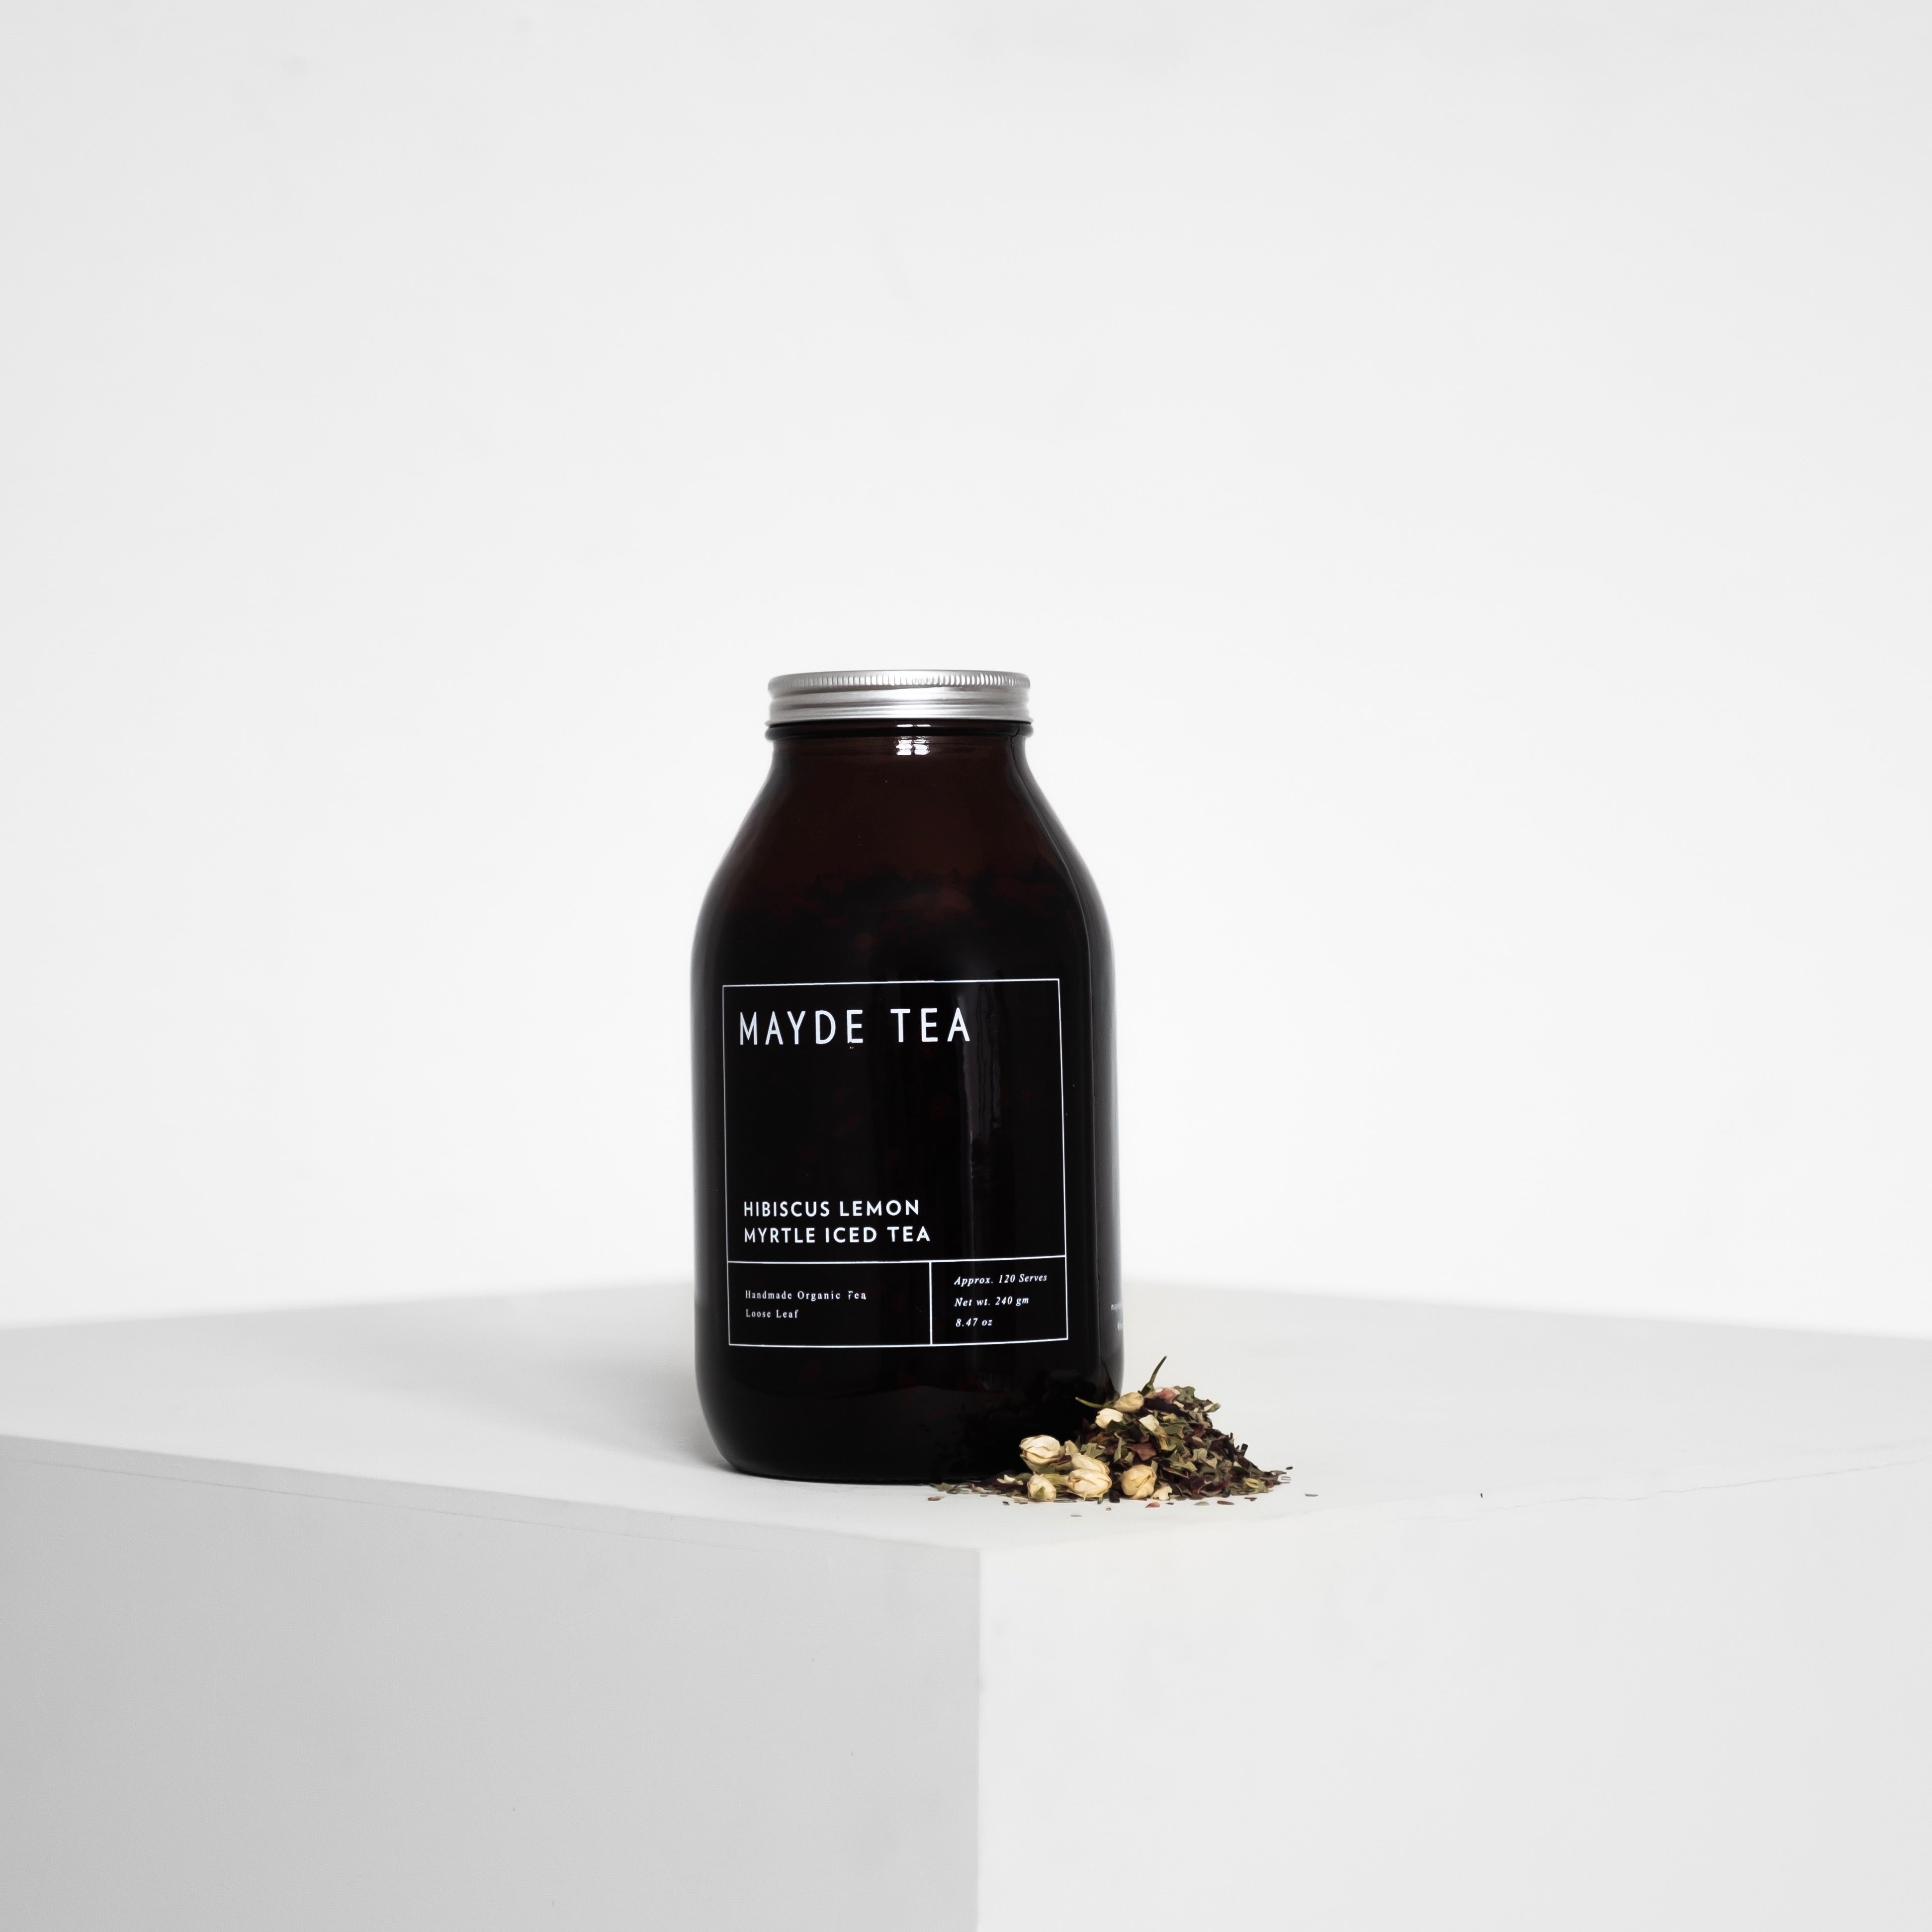 Hibiscus Lemon Myrtle Iced Tea Herbal Teas Mayde Tea 120 serve jar  